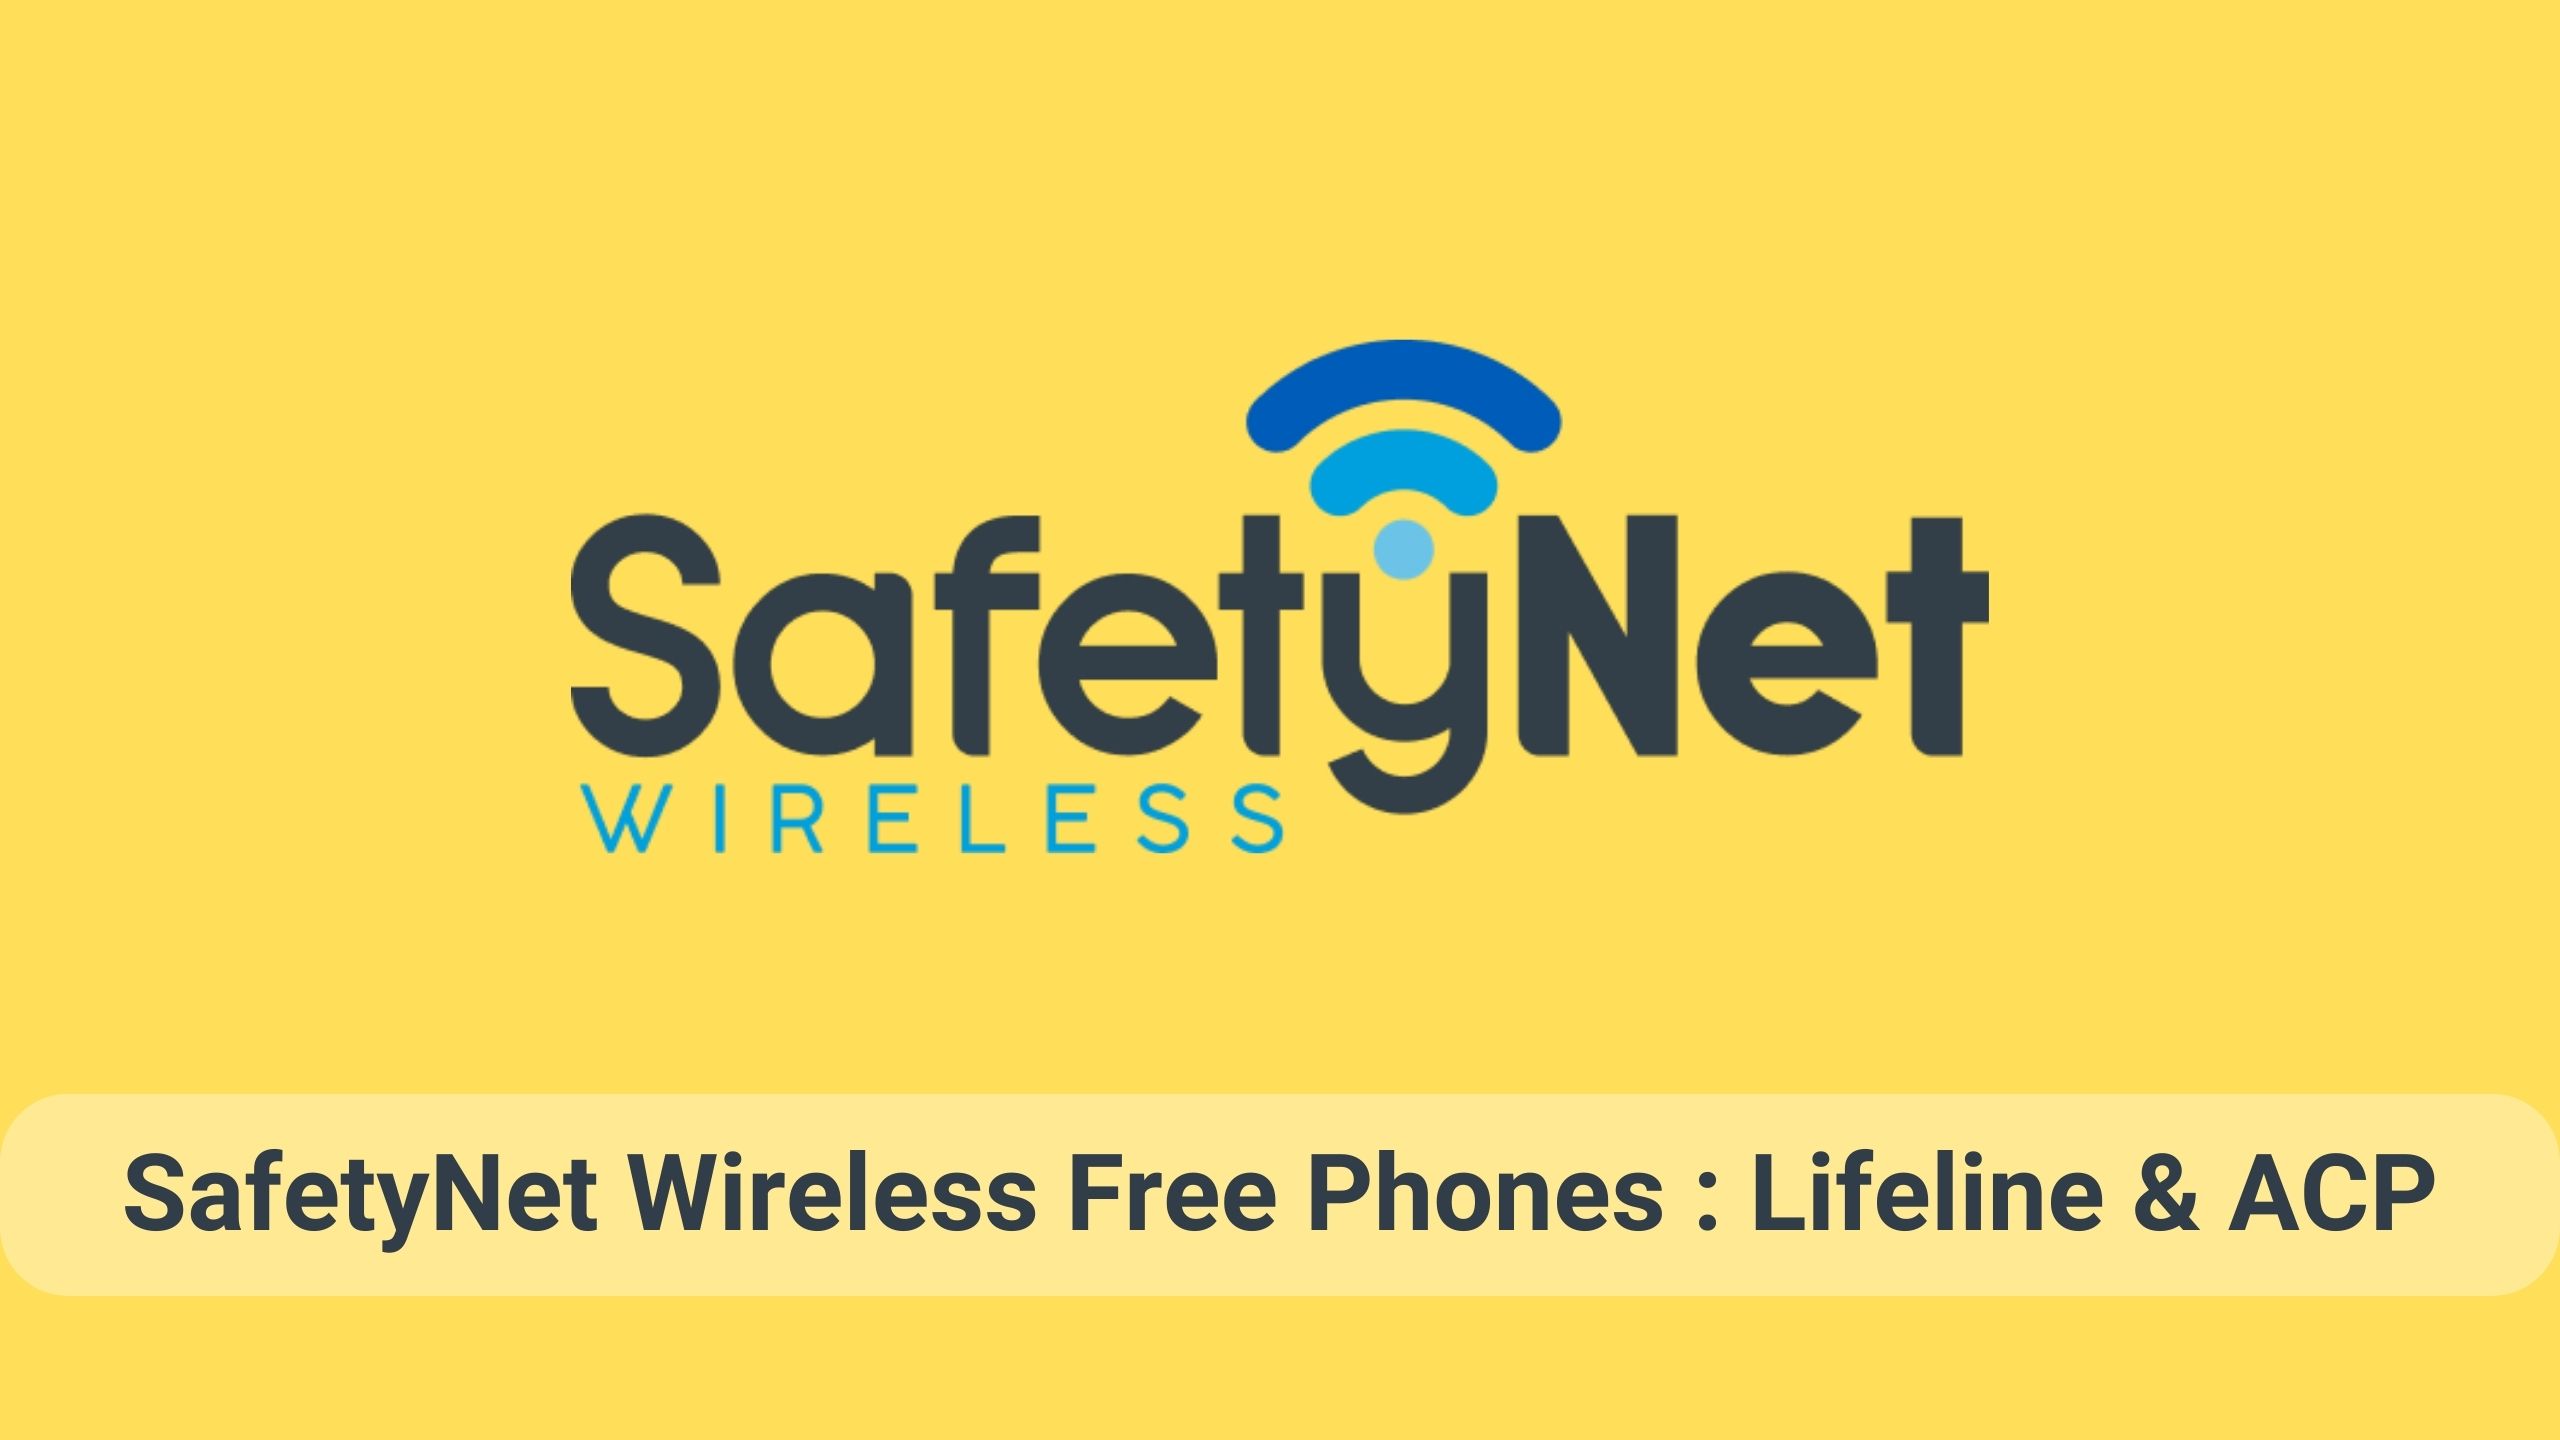 SafetyNet Wireless Free Phones Program : Lifeline & ACP Plans